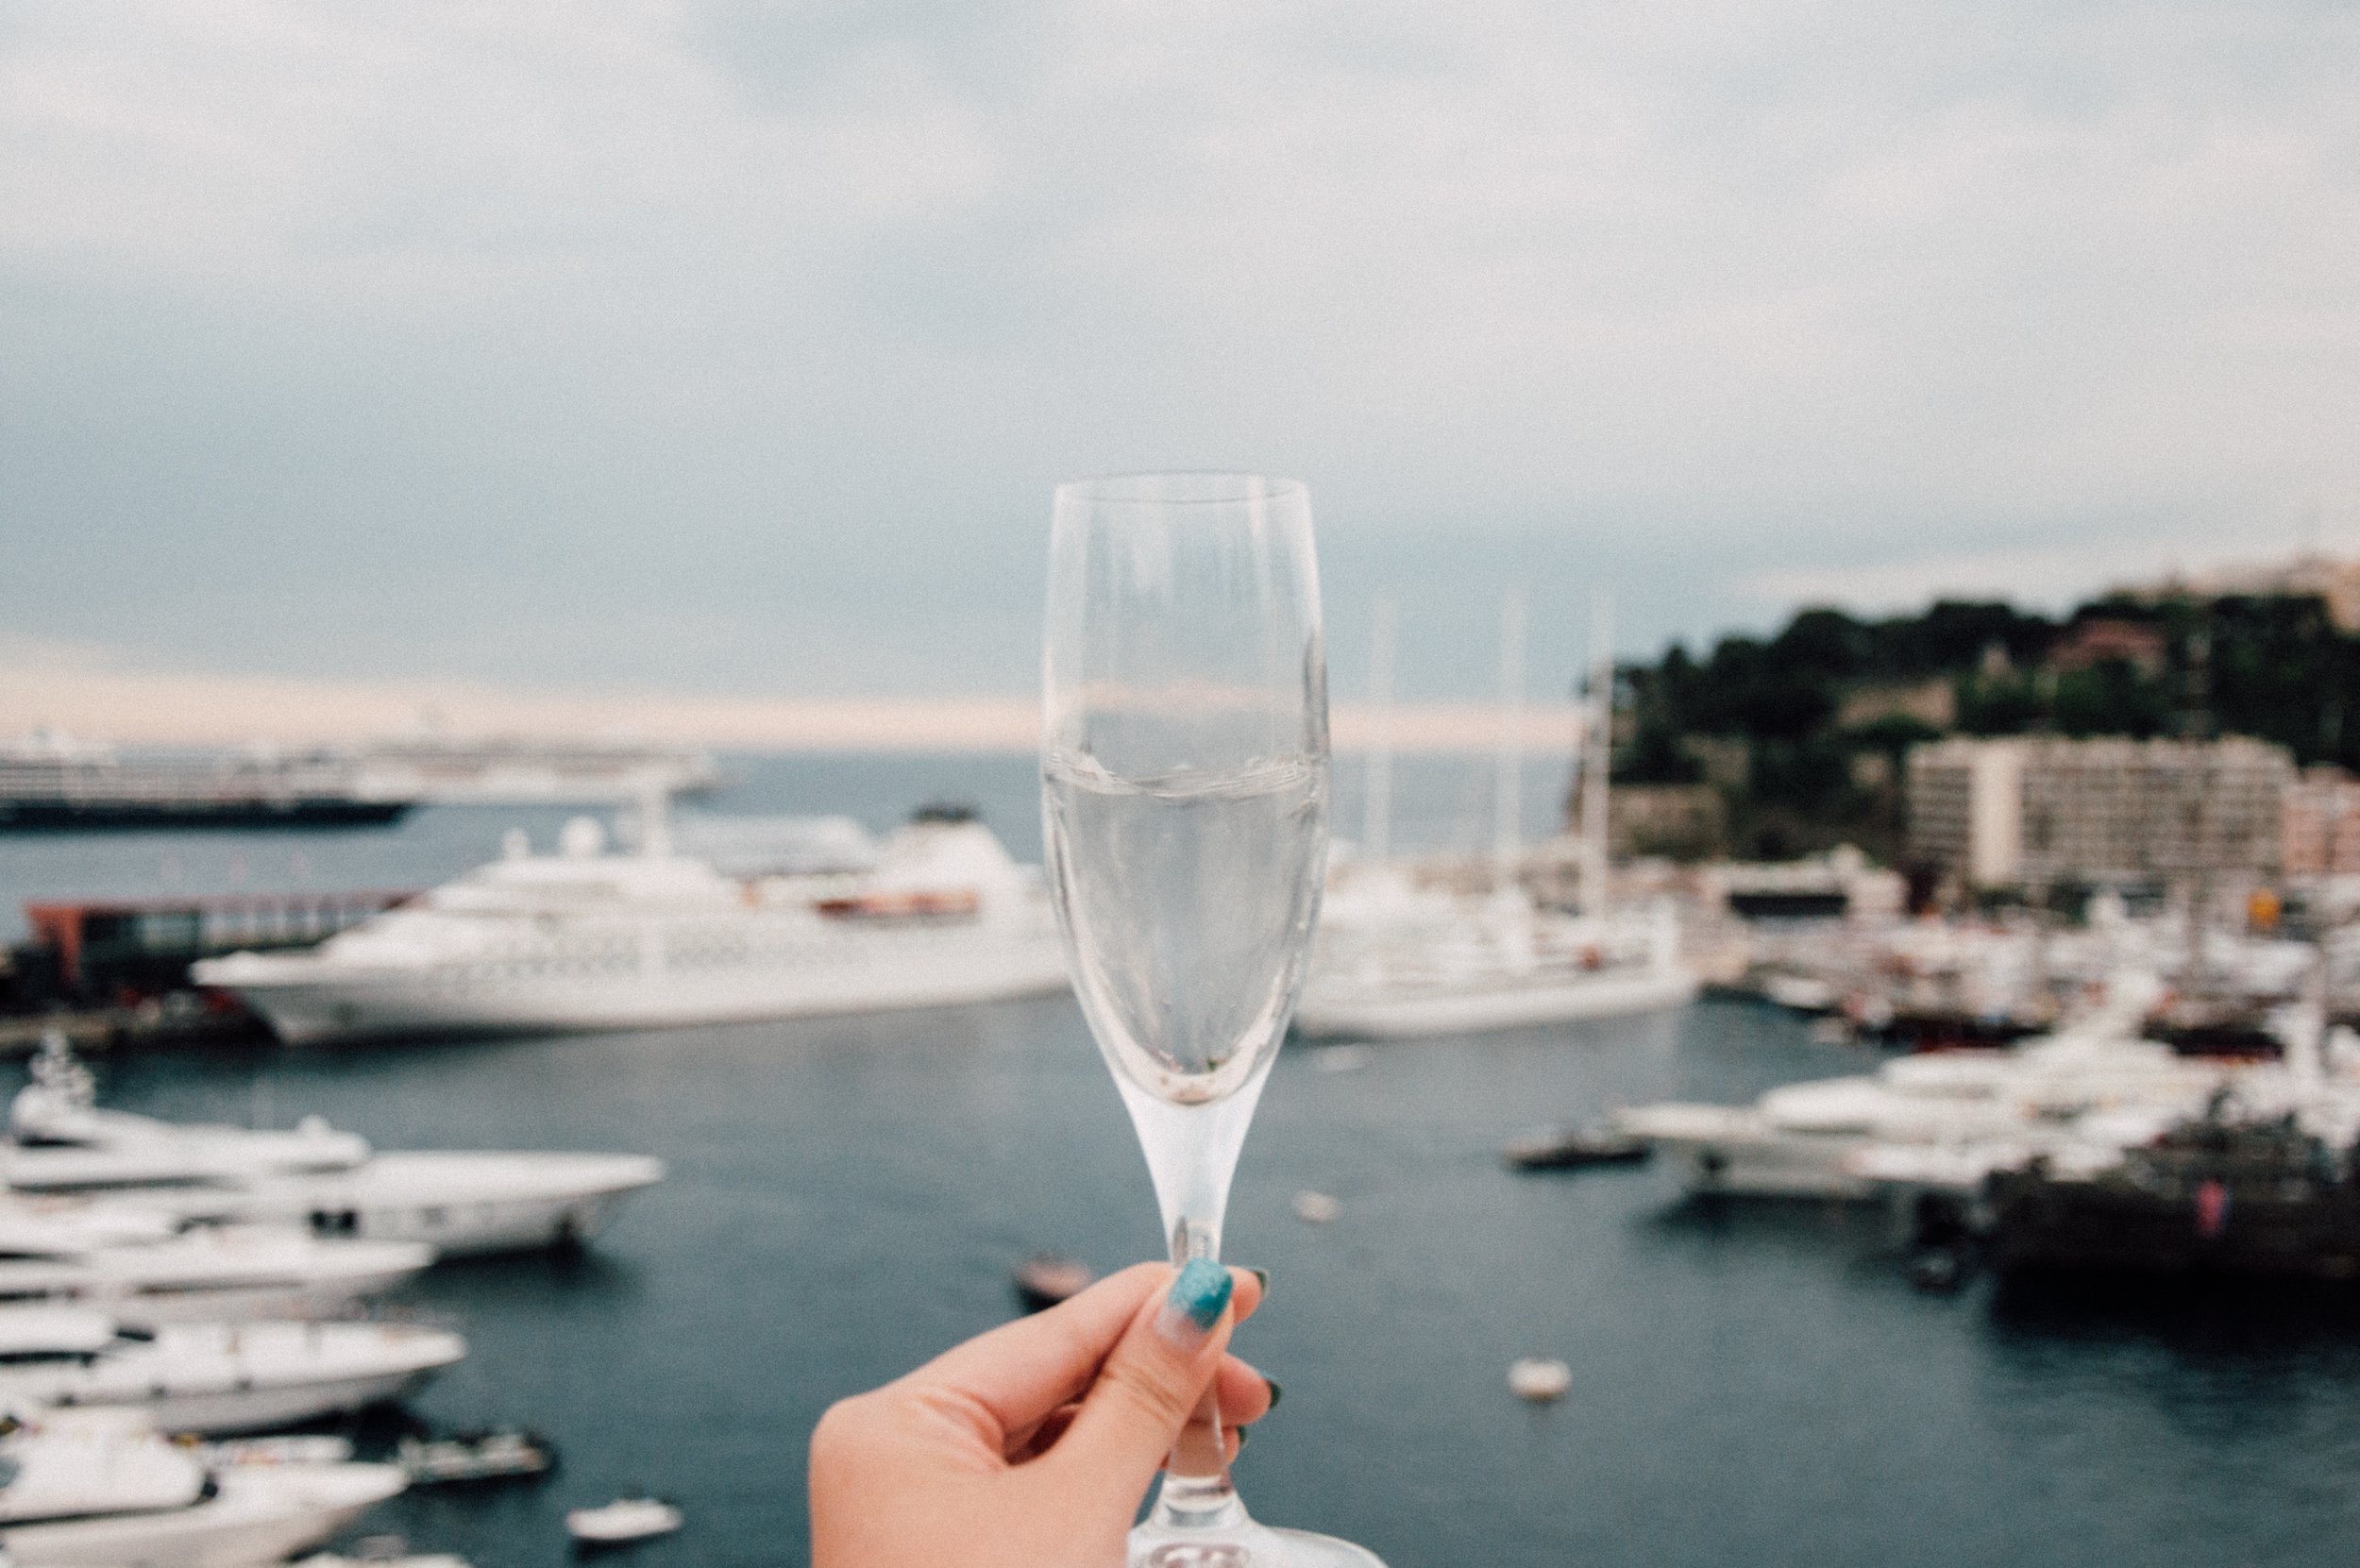 Champagne Glass and Yachts by Jennie Ramida on Unsplash